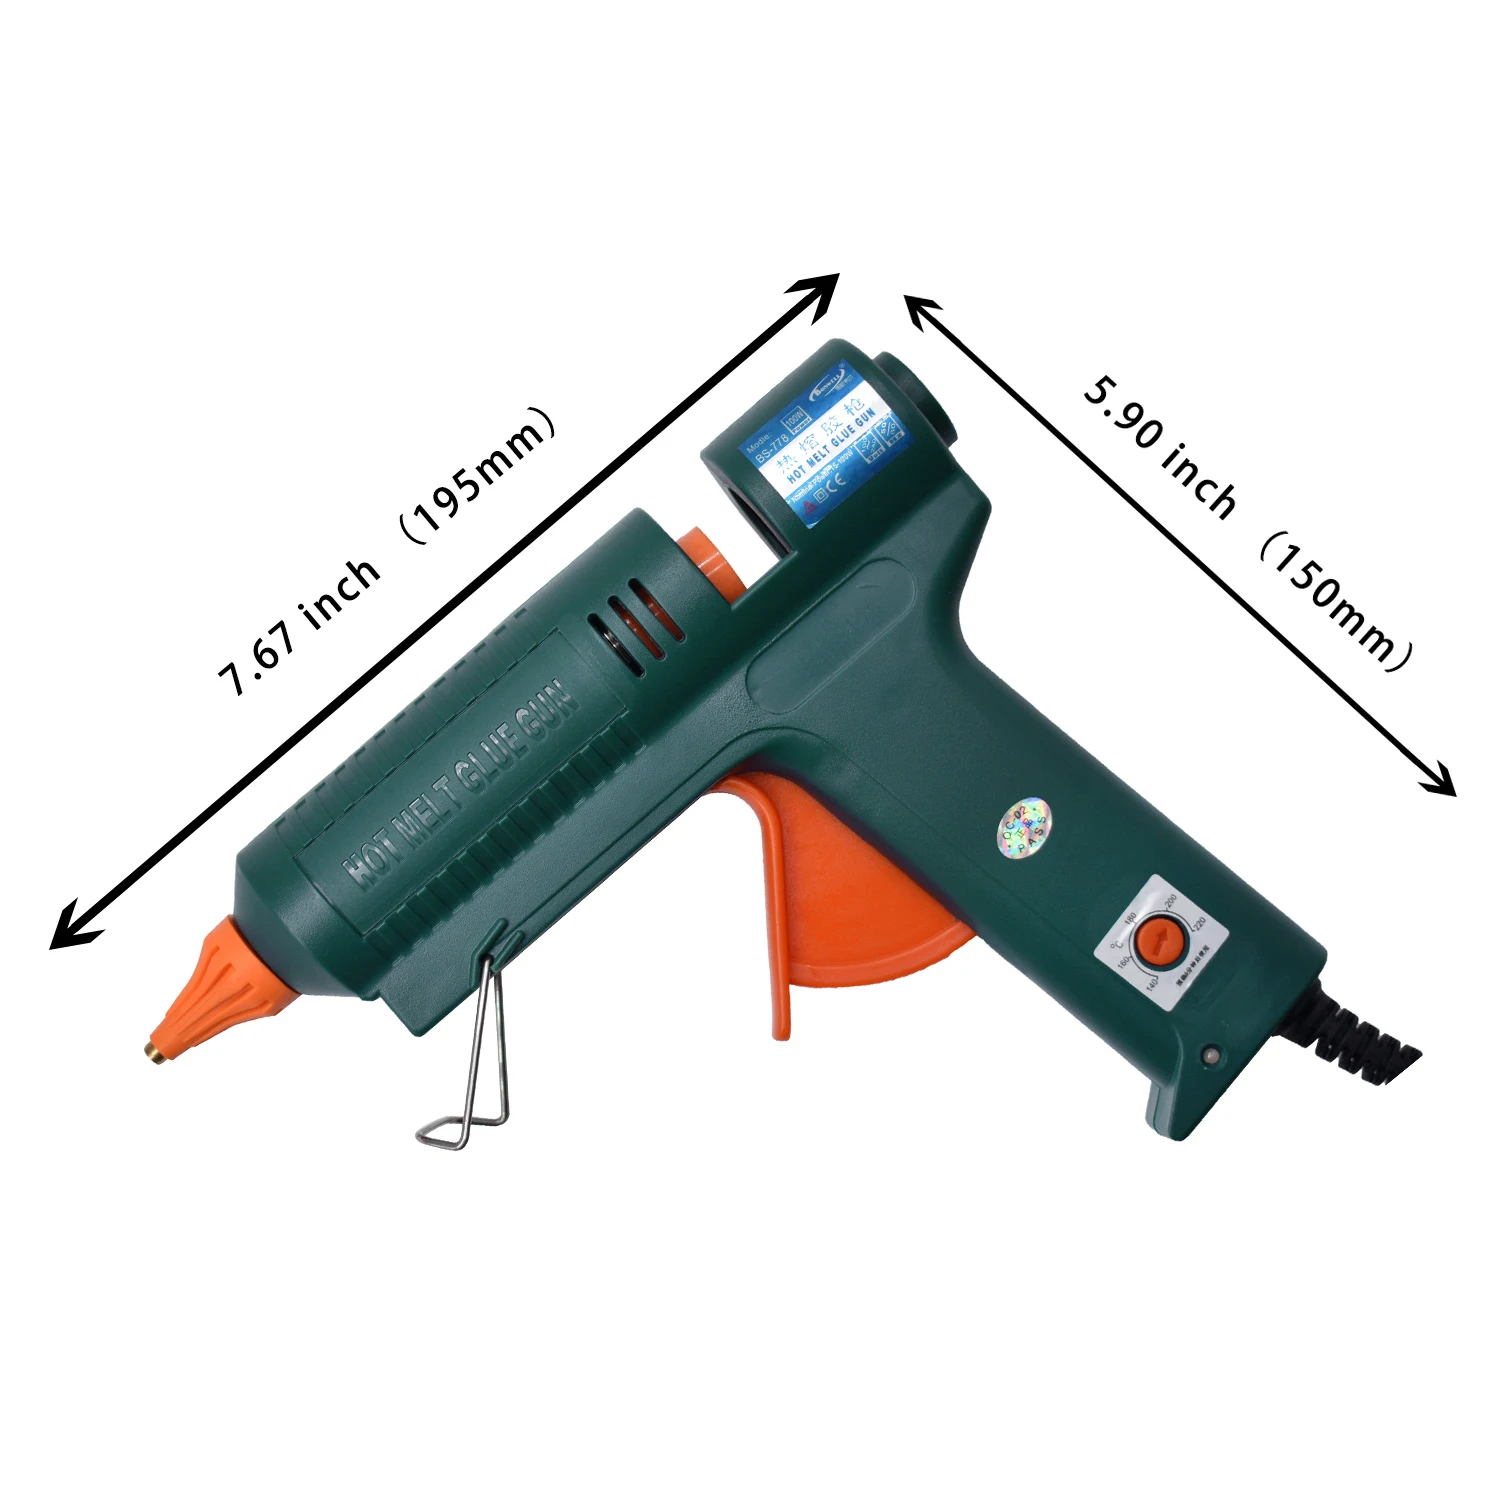 150W Glue Gun Hot Melt Electric Trigger DIY Adhesive Crafts FREE GLUE STICKS NEW 